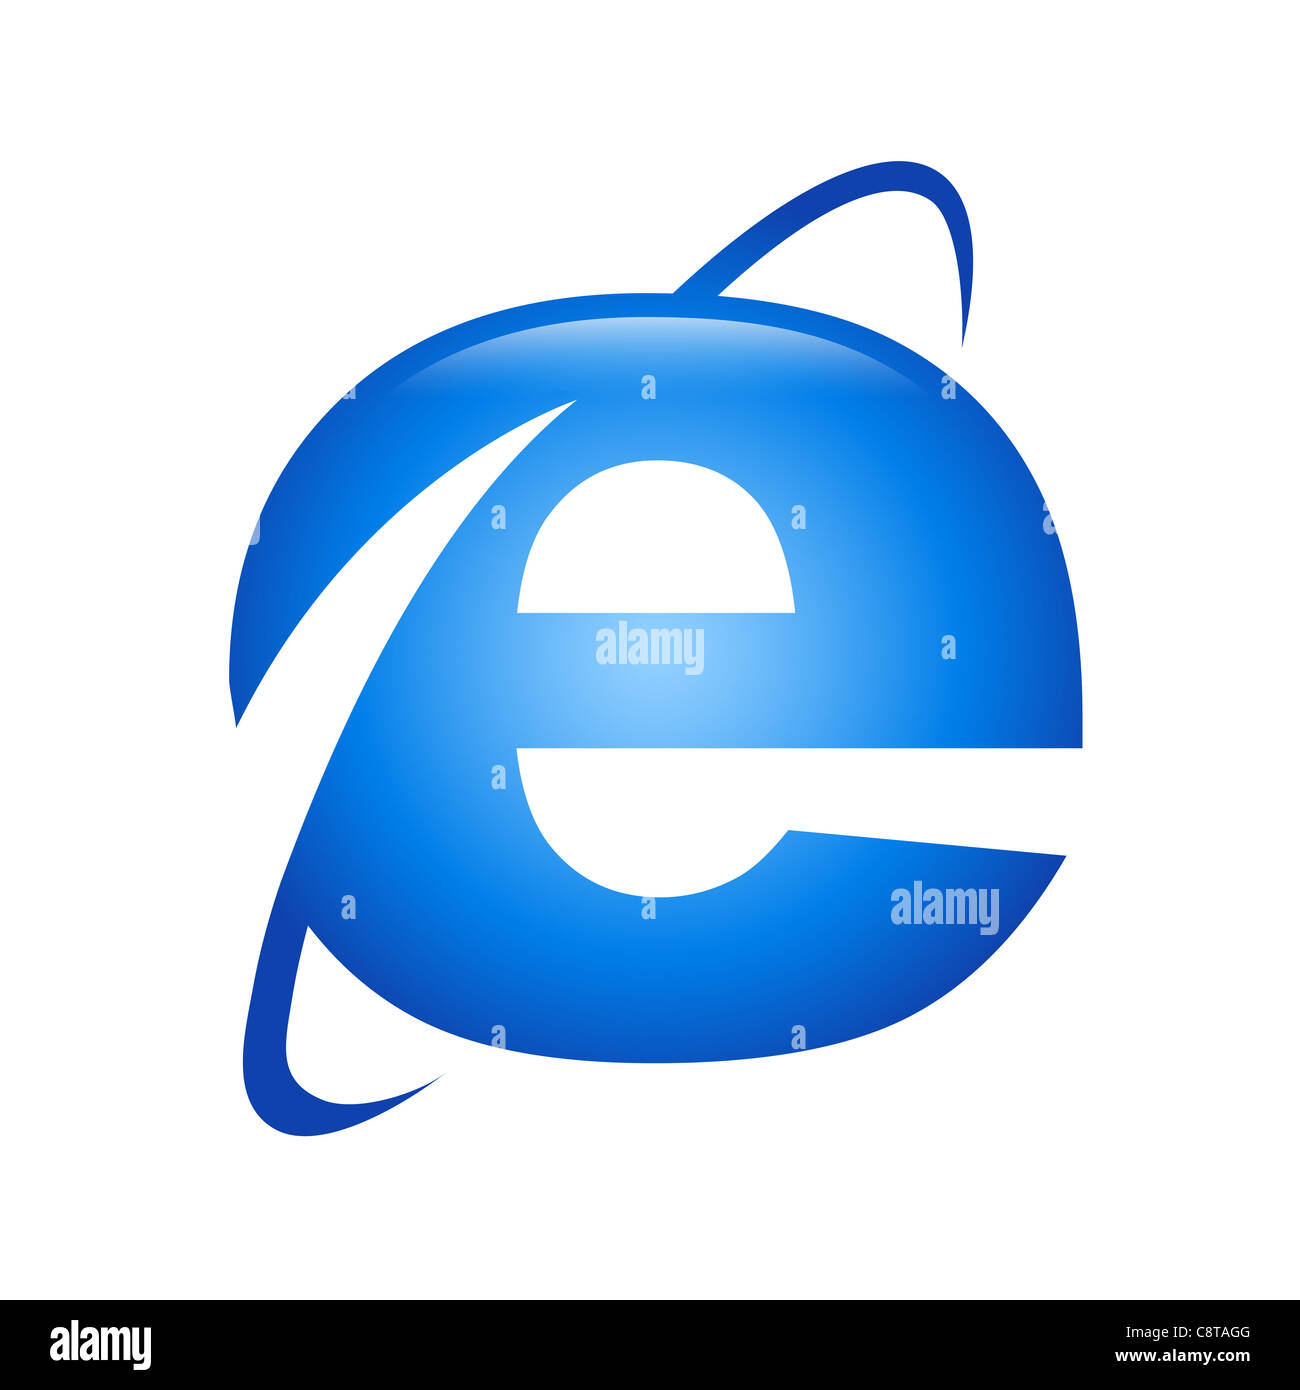 Illustration of e symbol Stock Photo